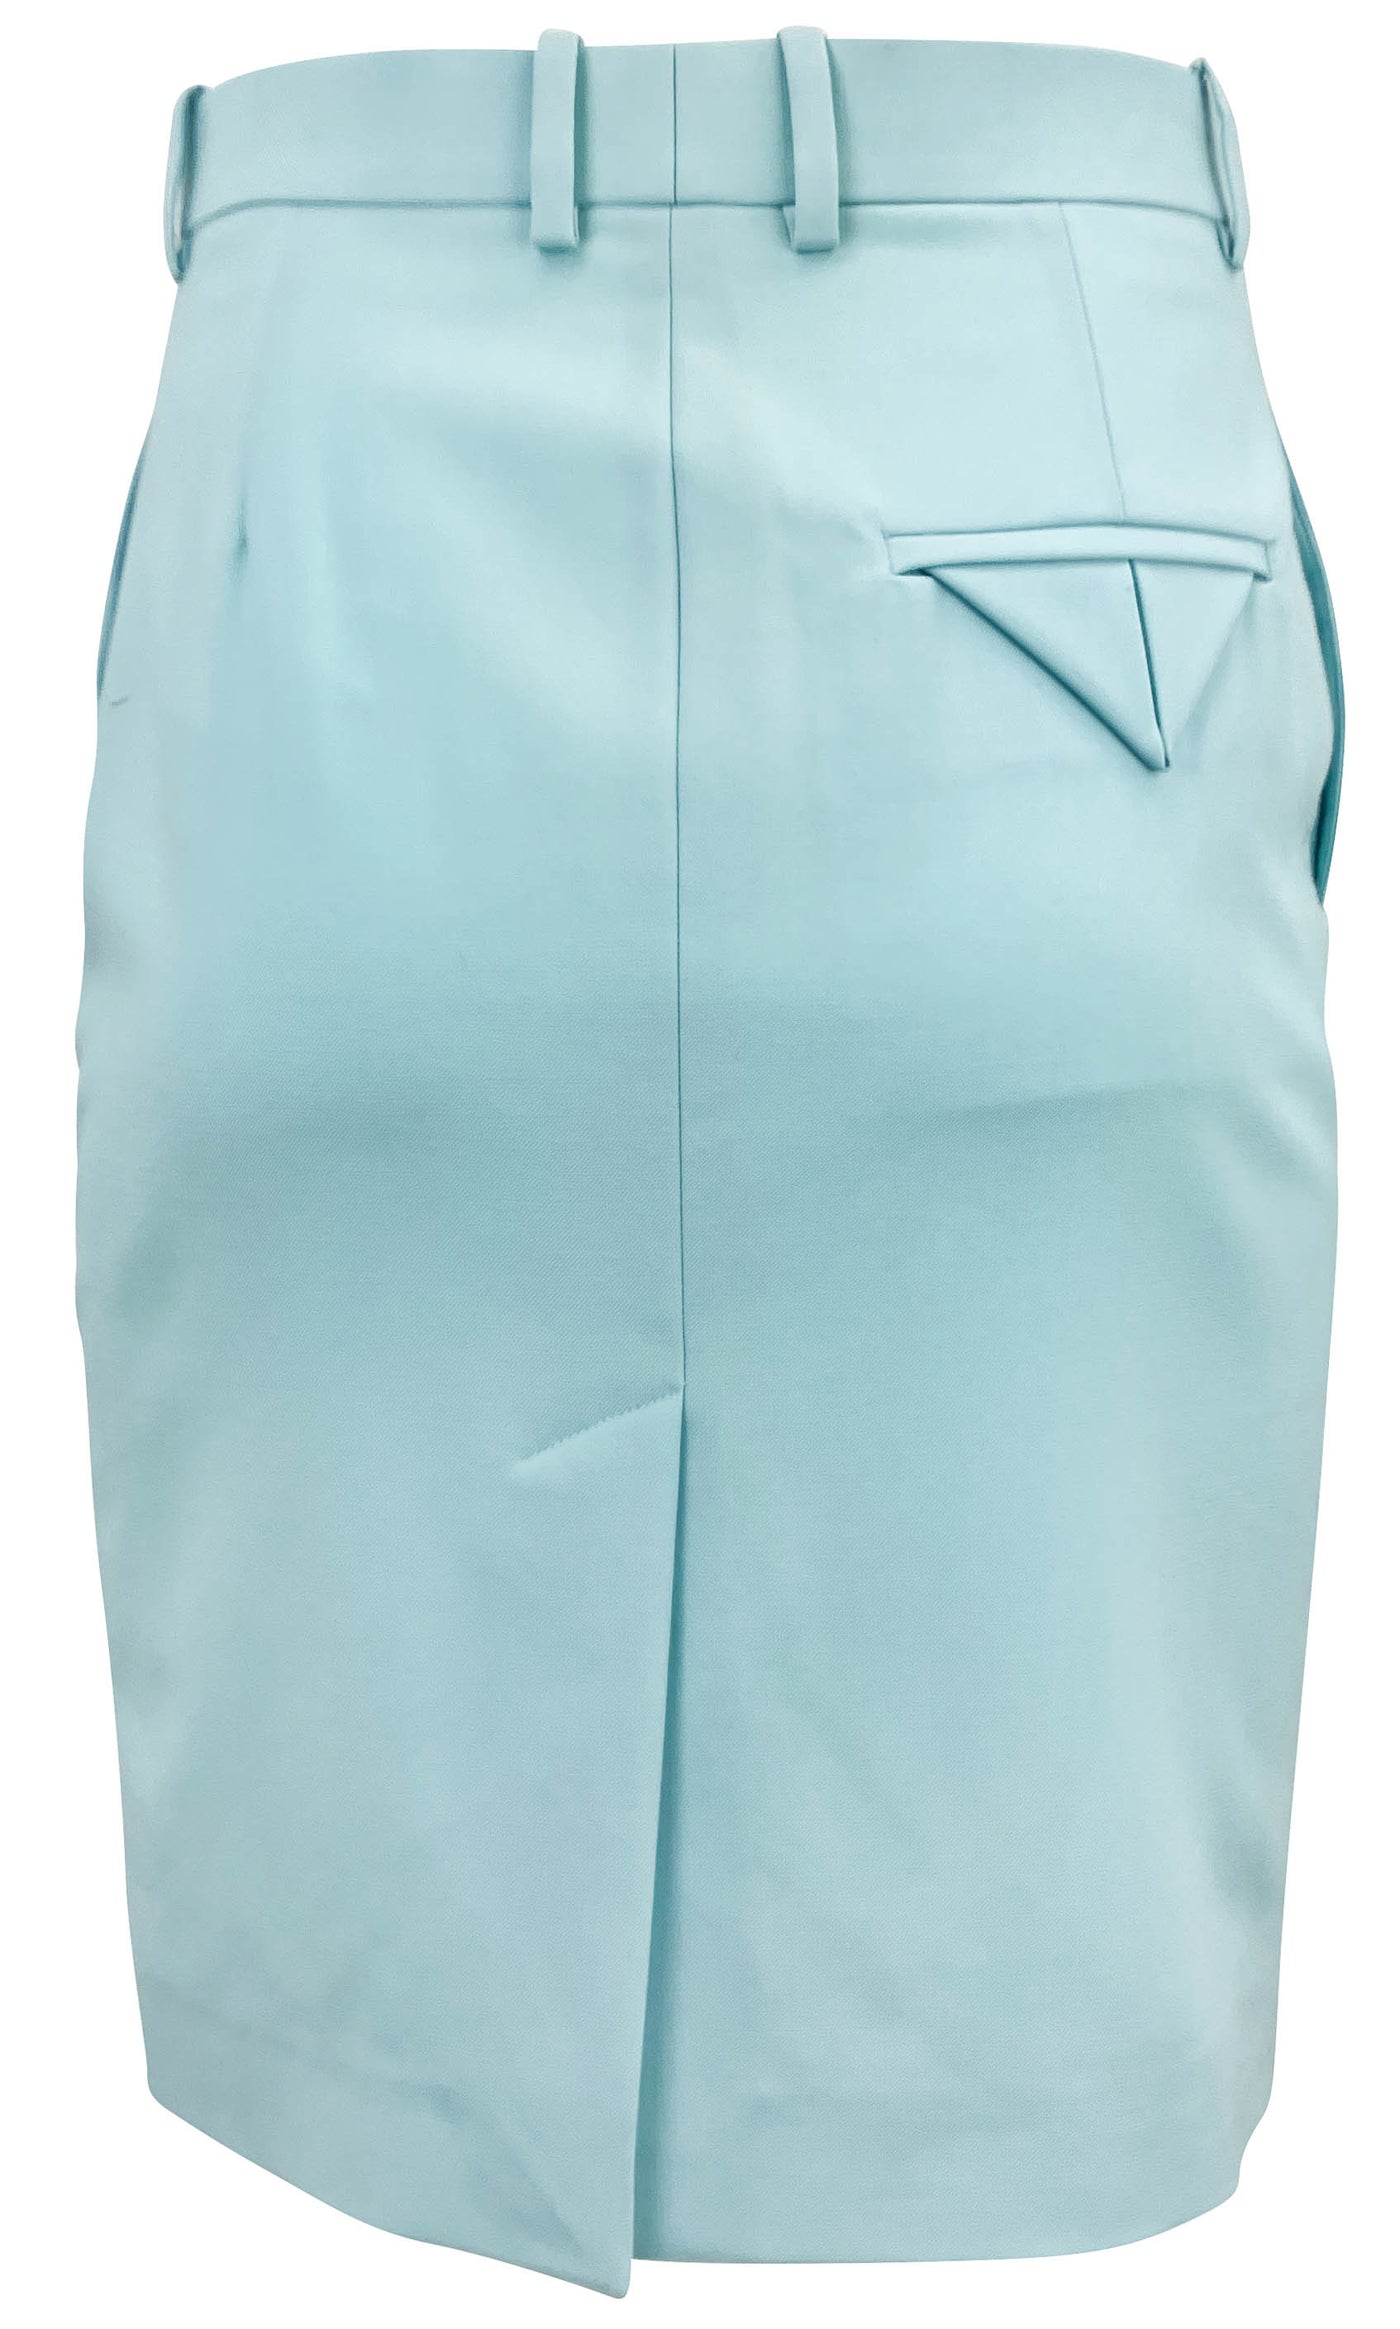 Bottega Veneta Wool Skirt in Light Blue - Discounts on Bottega Veneta at UAL